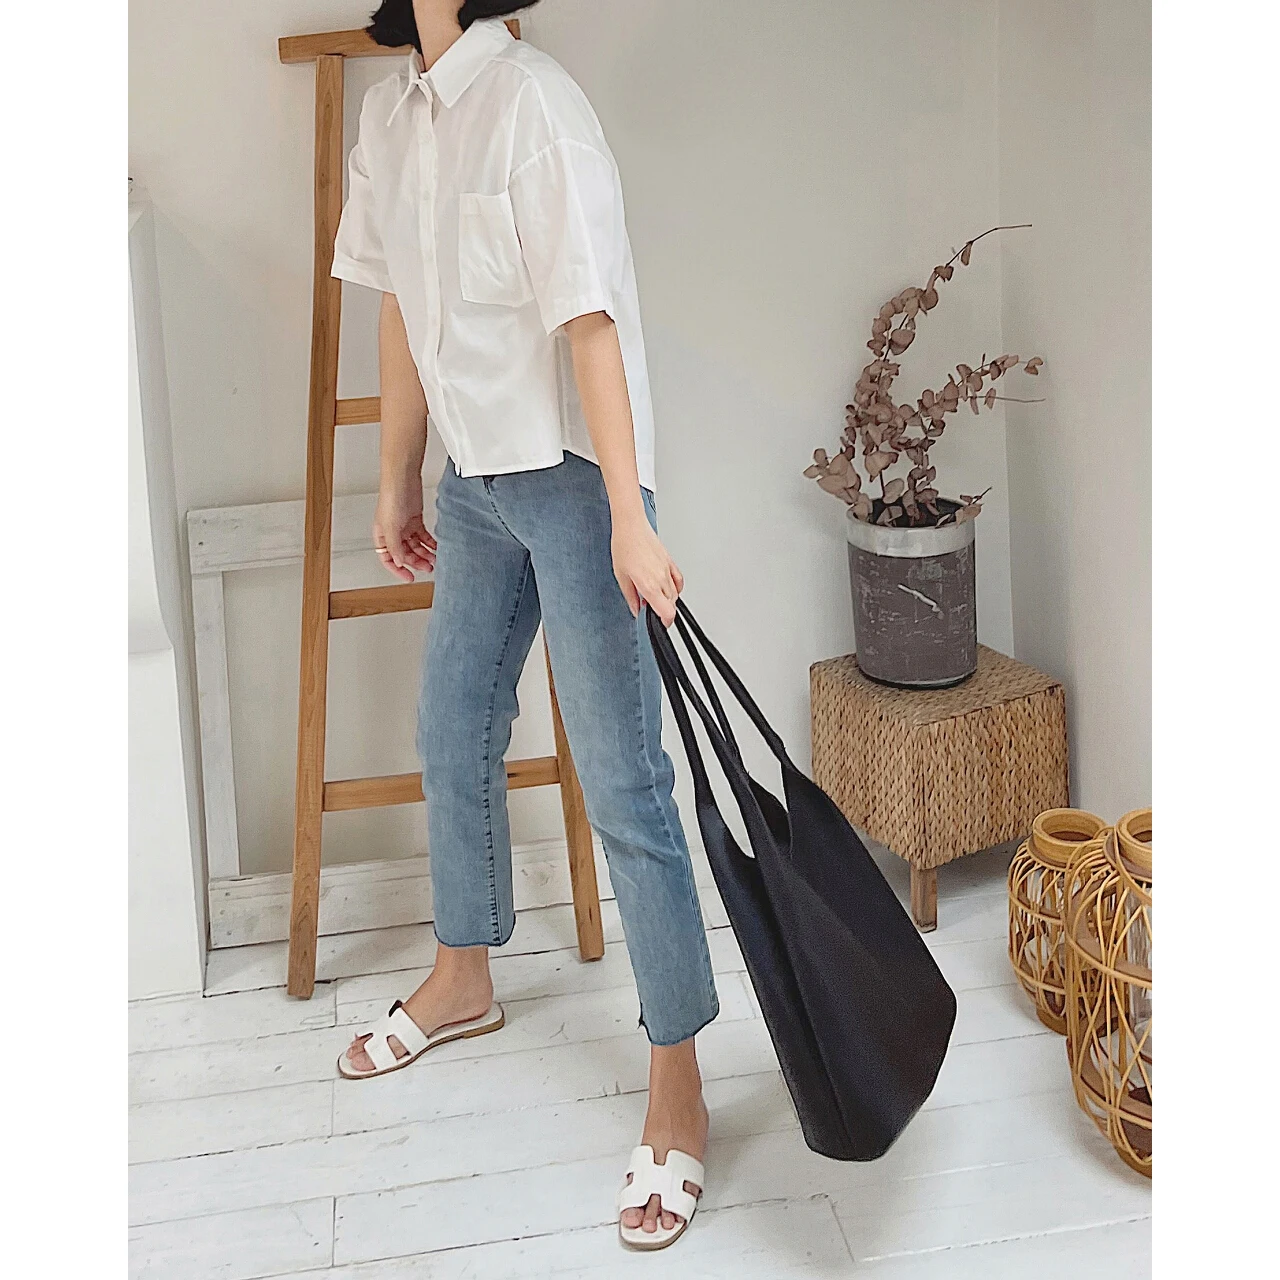 2022 Woman Casual Blouses Shirt T-shirt Clothing Fashion Top Summer Cheap Urban Korean Basic Chic Short Sleeve Crop White Style